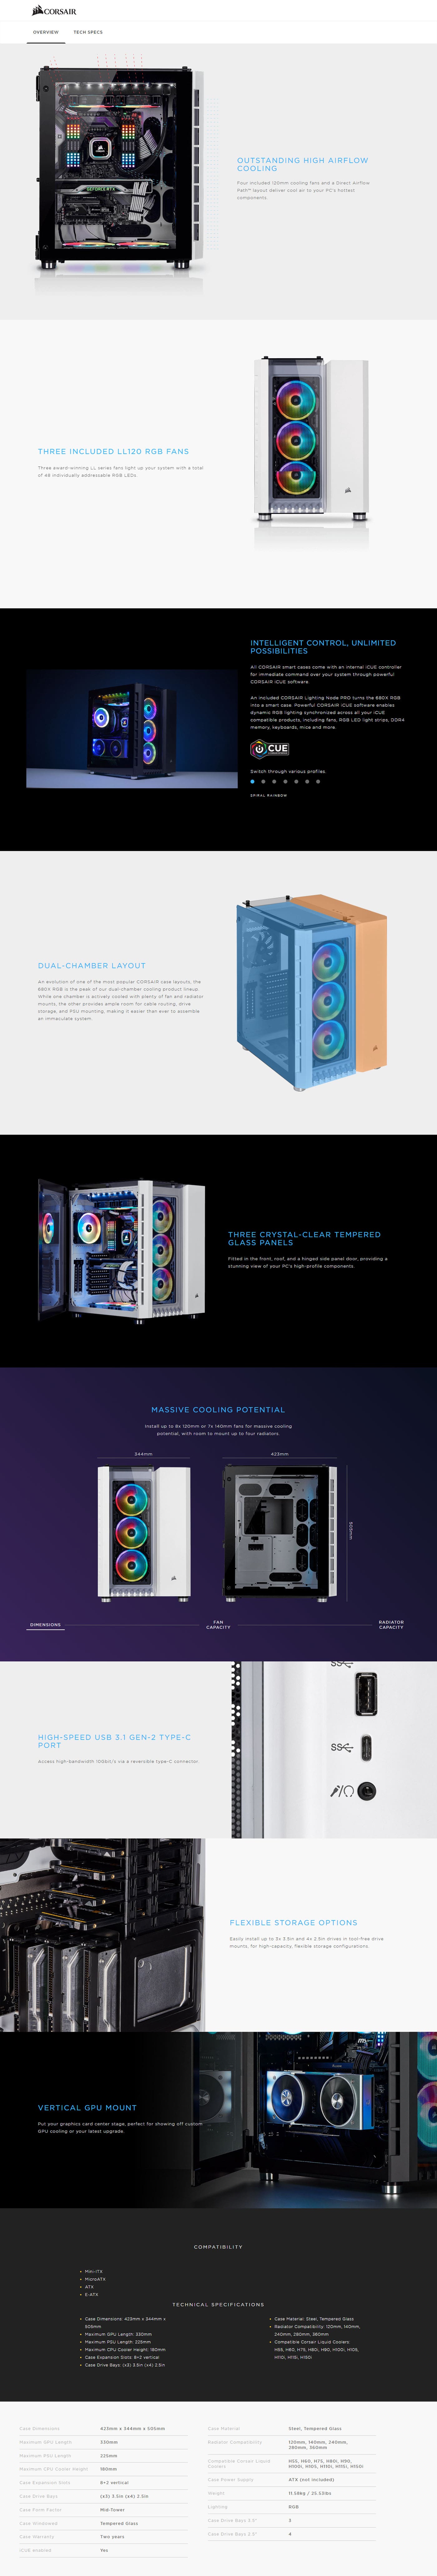 Buy Online Corsair Crystal Series 680X RGB ATX High Airflow Tempered Glass Smart Case - White (CC-9011169-WW)